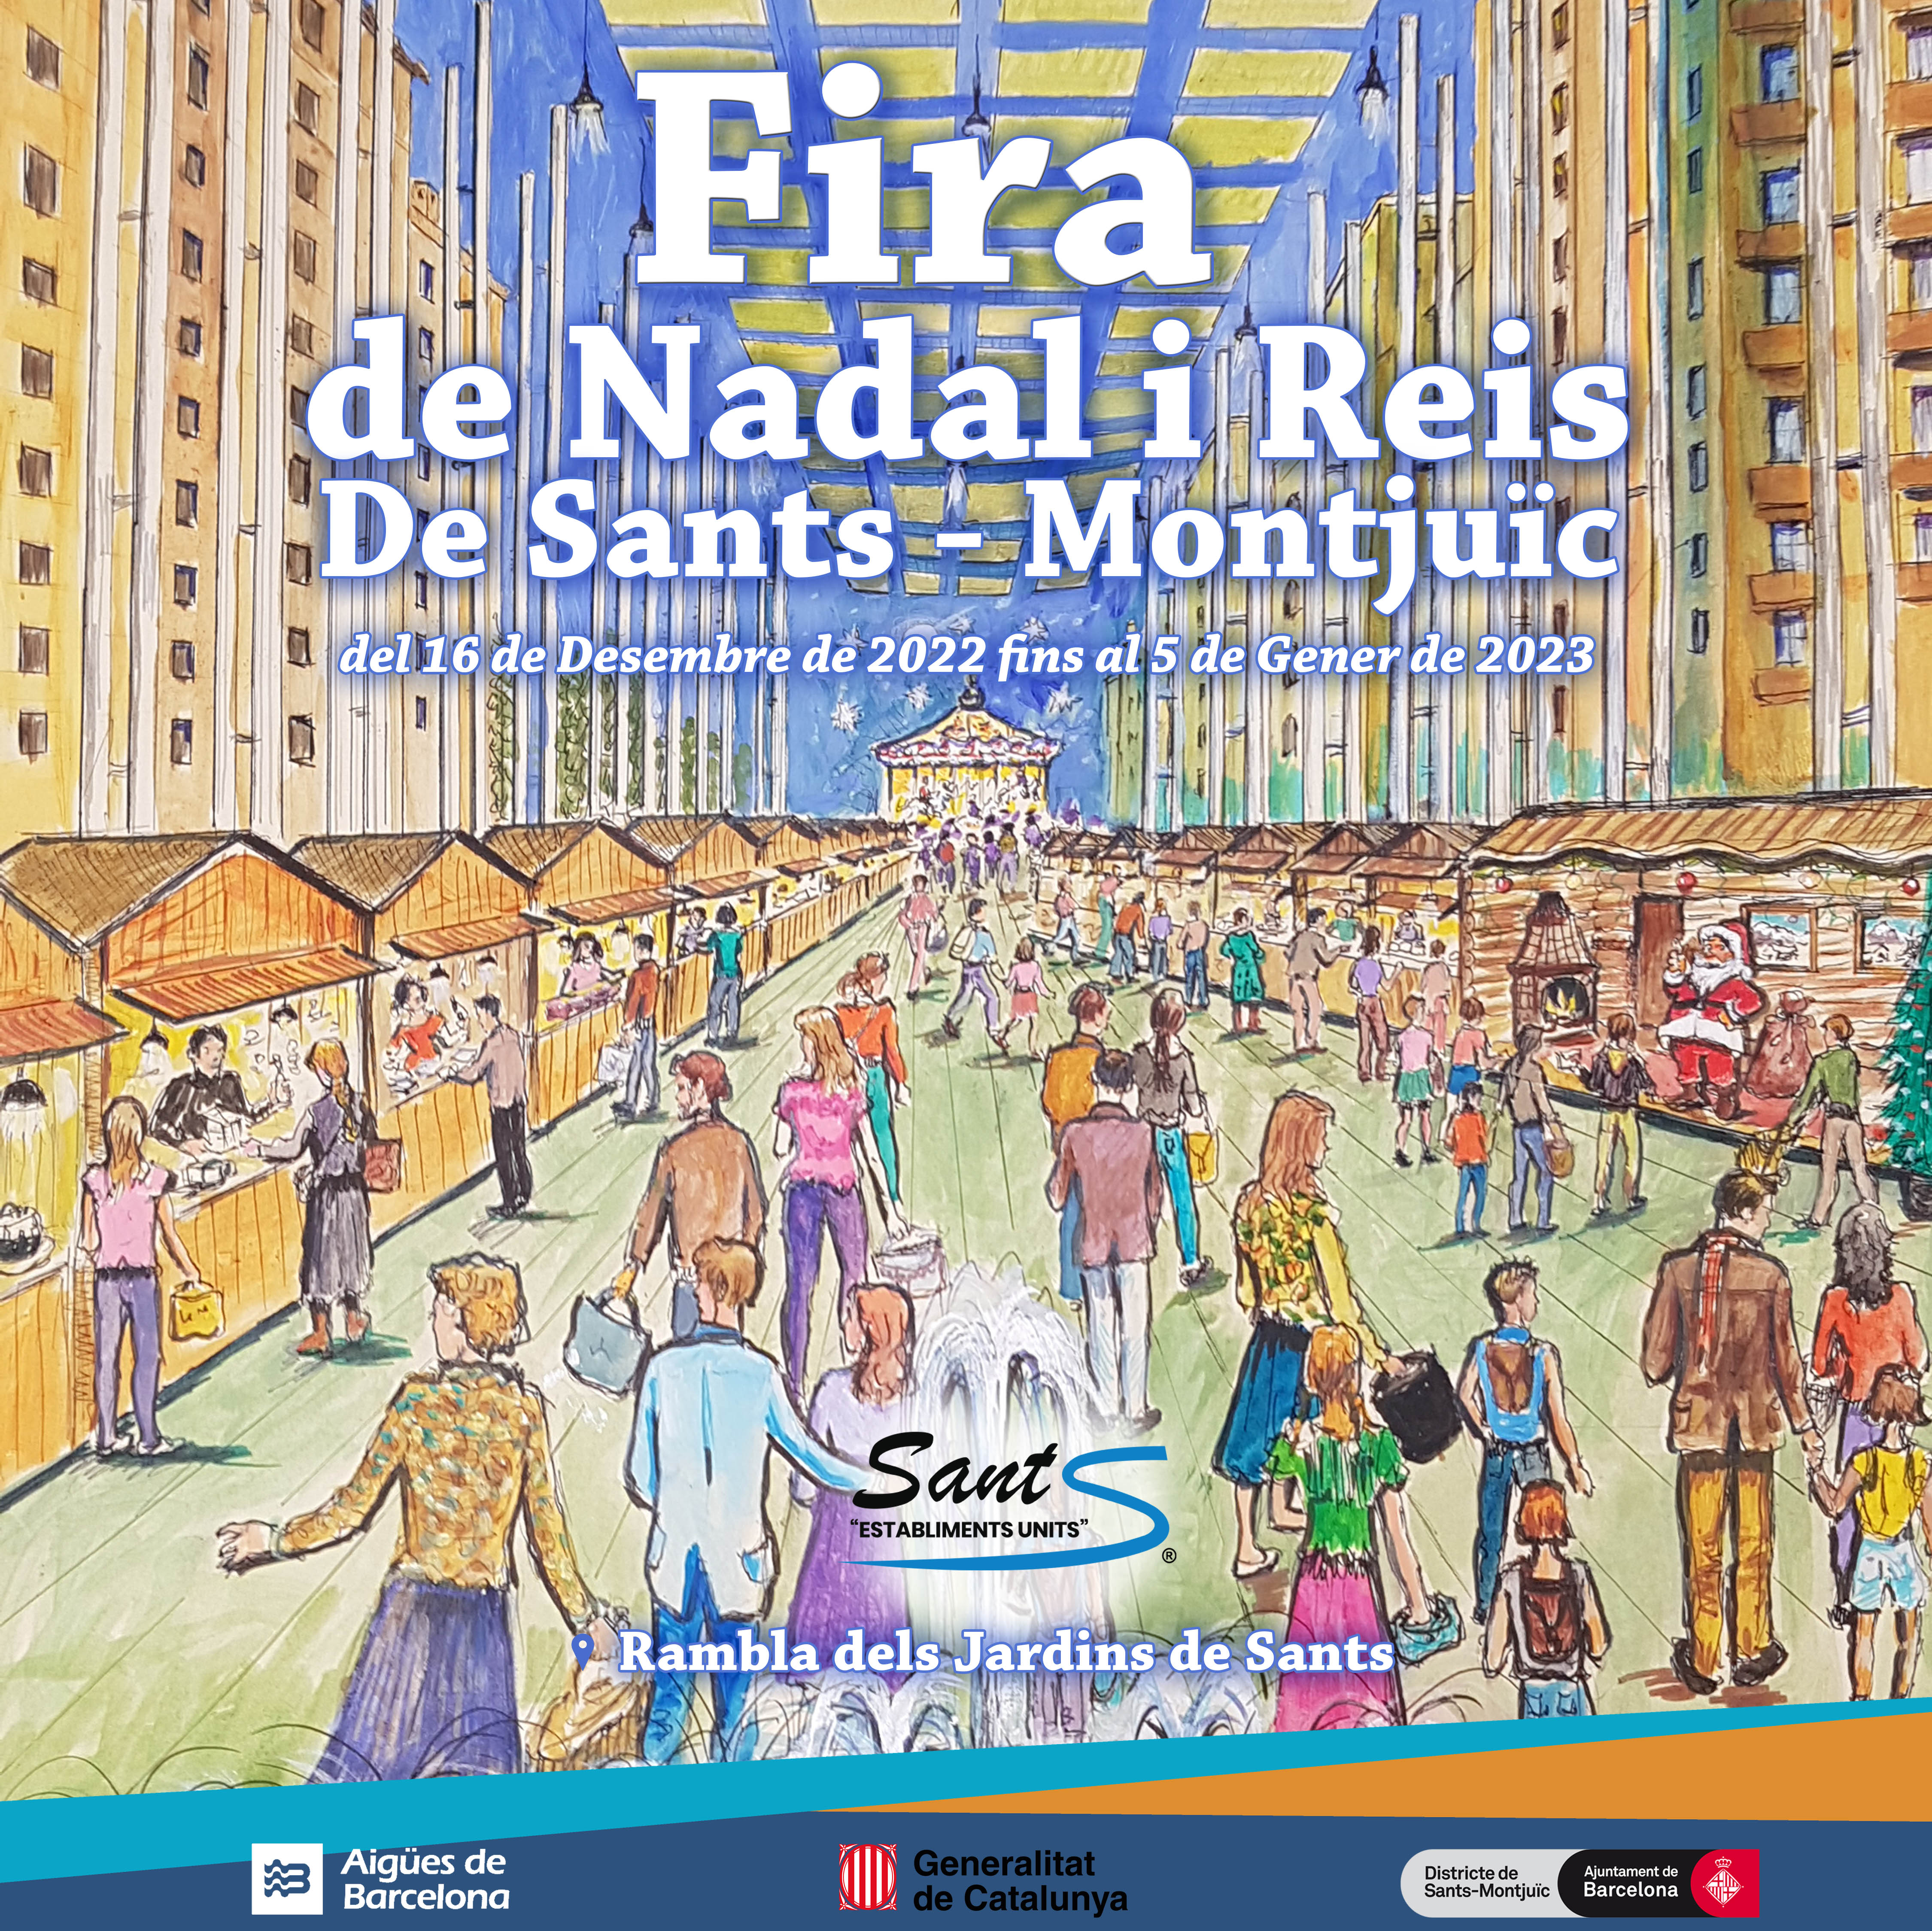 Feria de Navidad y Reyes de Sants - Montjuïc 2022